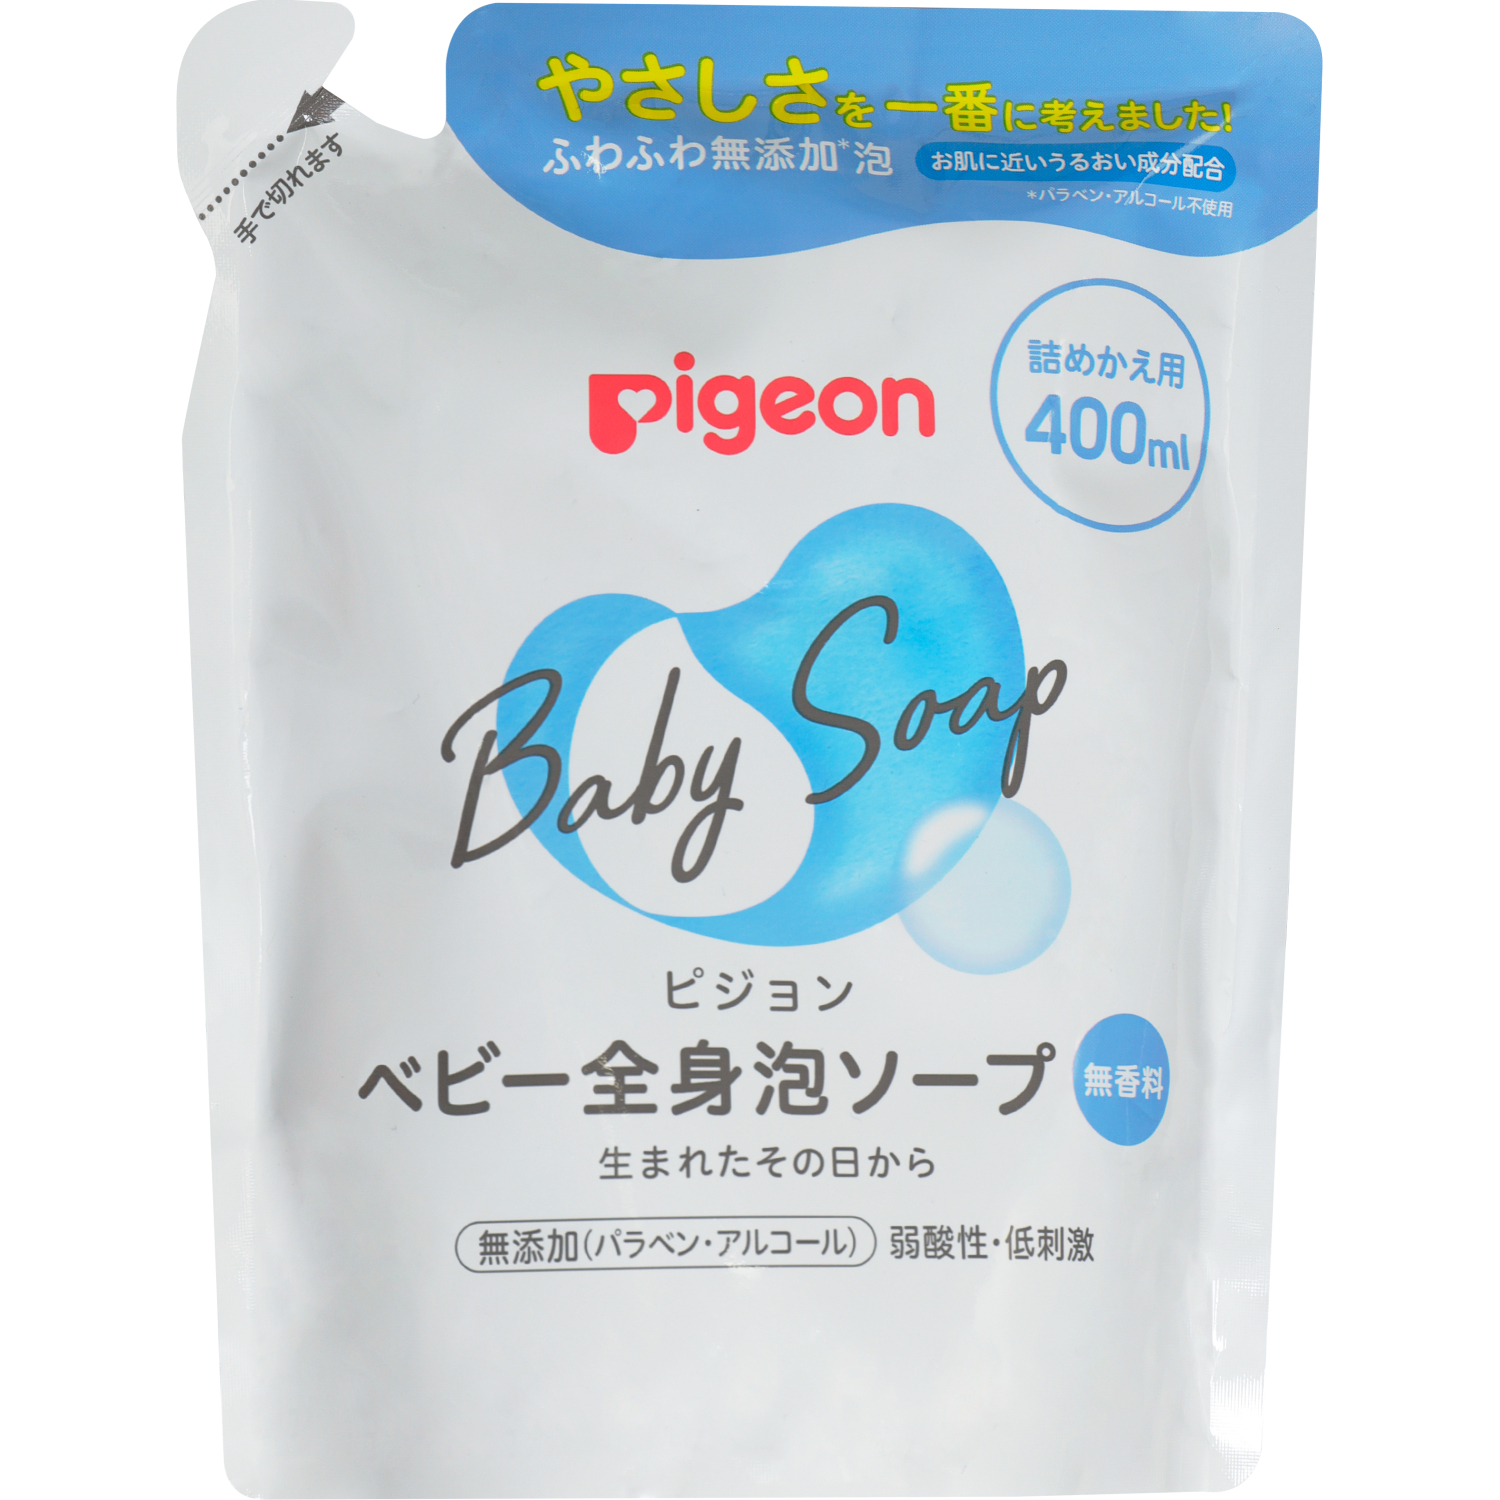 Мыло-пенка Pigeon для младенцев сменный блок 400 мл pigeon мыло пенка для младенцев с рождения флакон дозатор 500мл